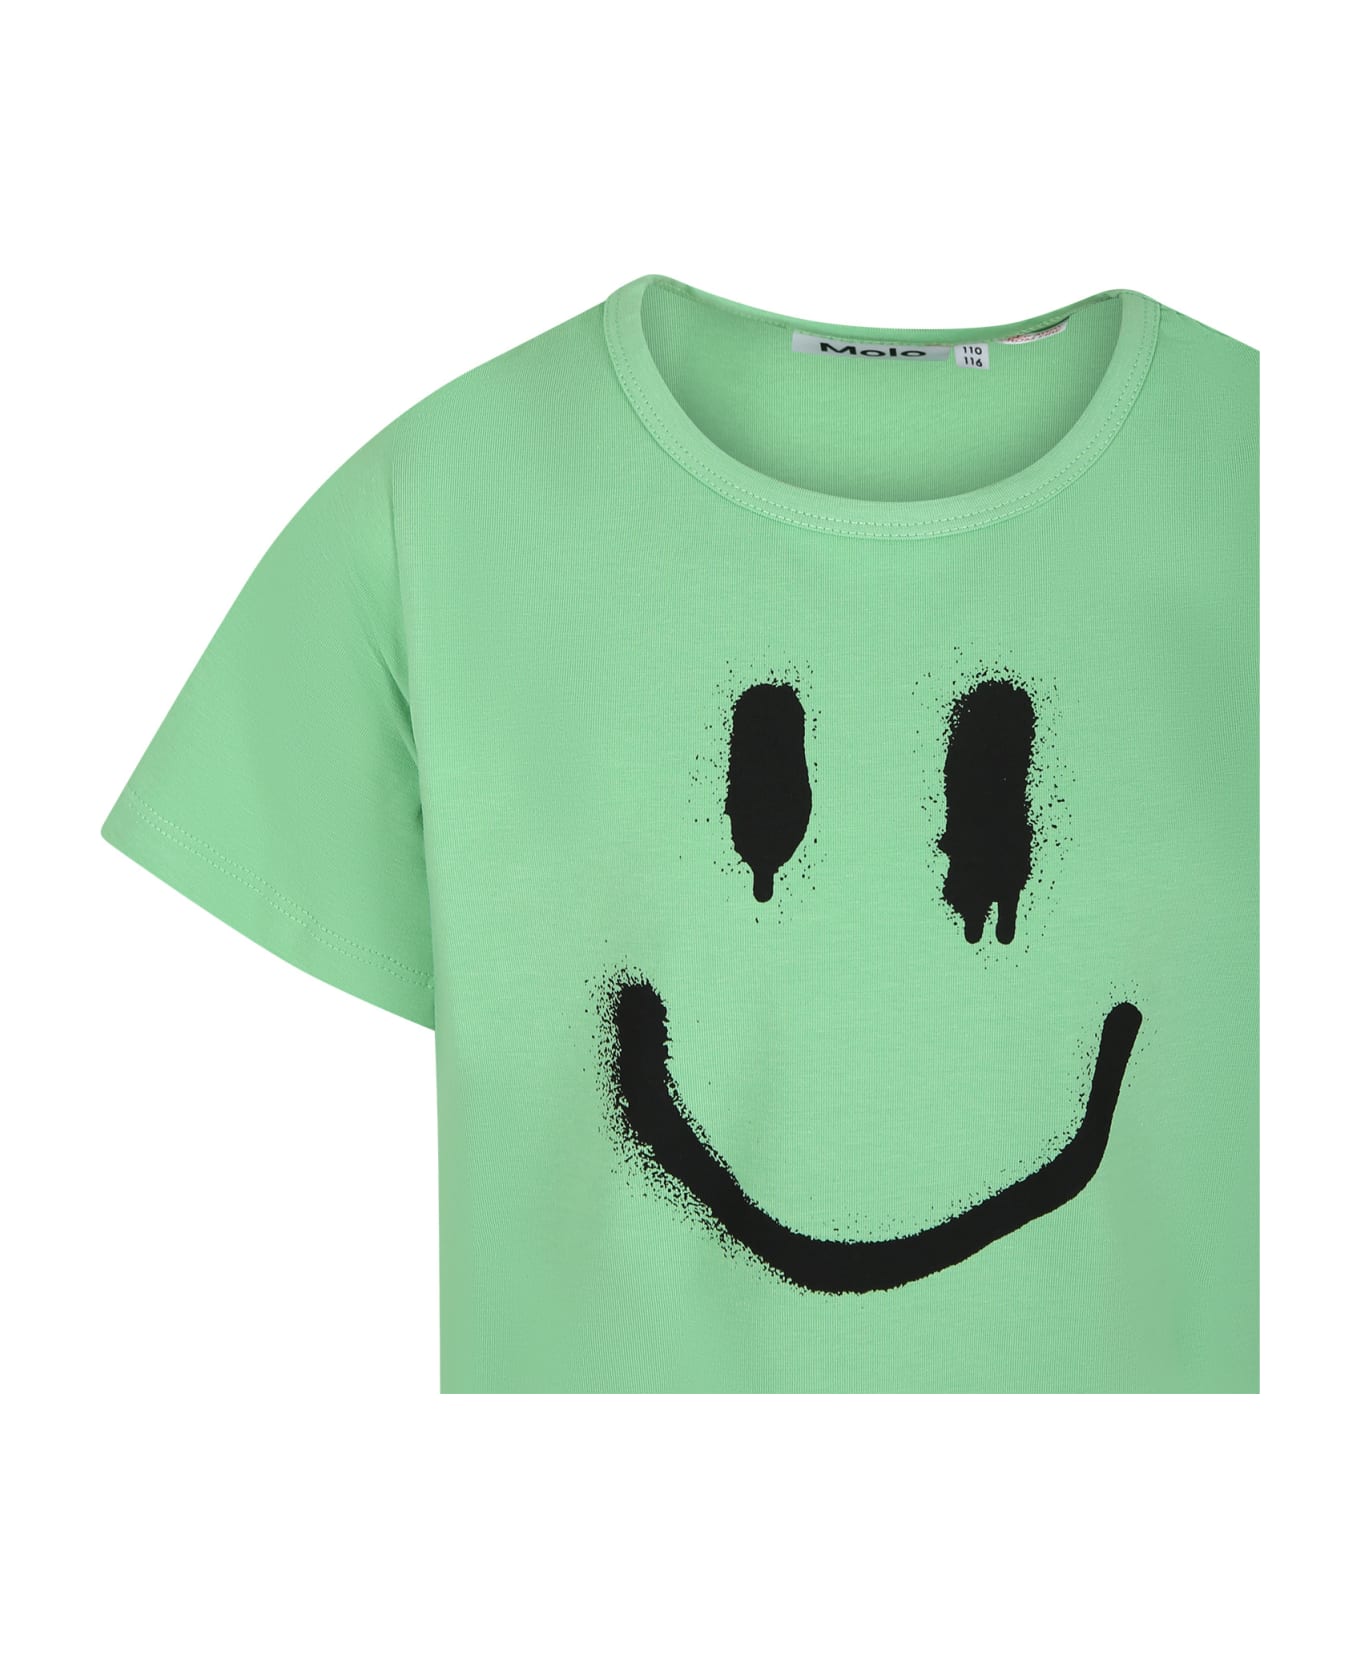 Molo Green Pajamas For Kids With Smile - Green ジャンプスーツ